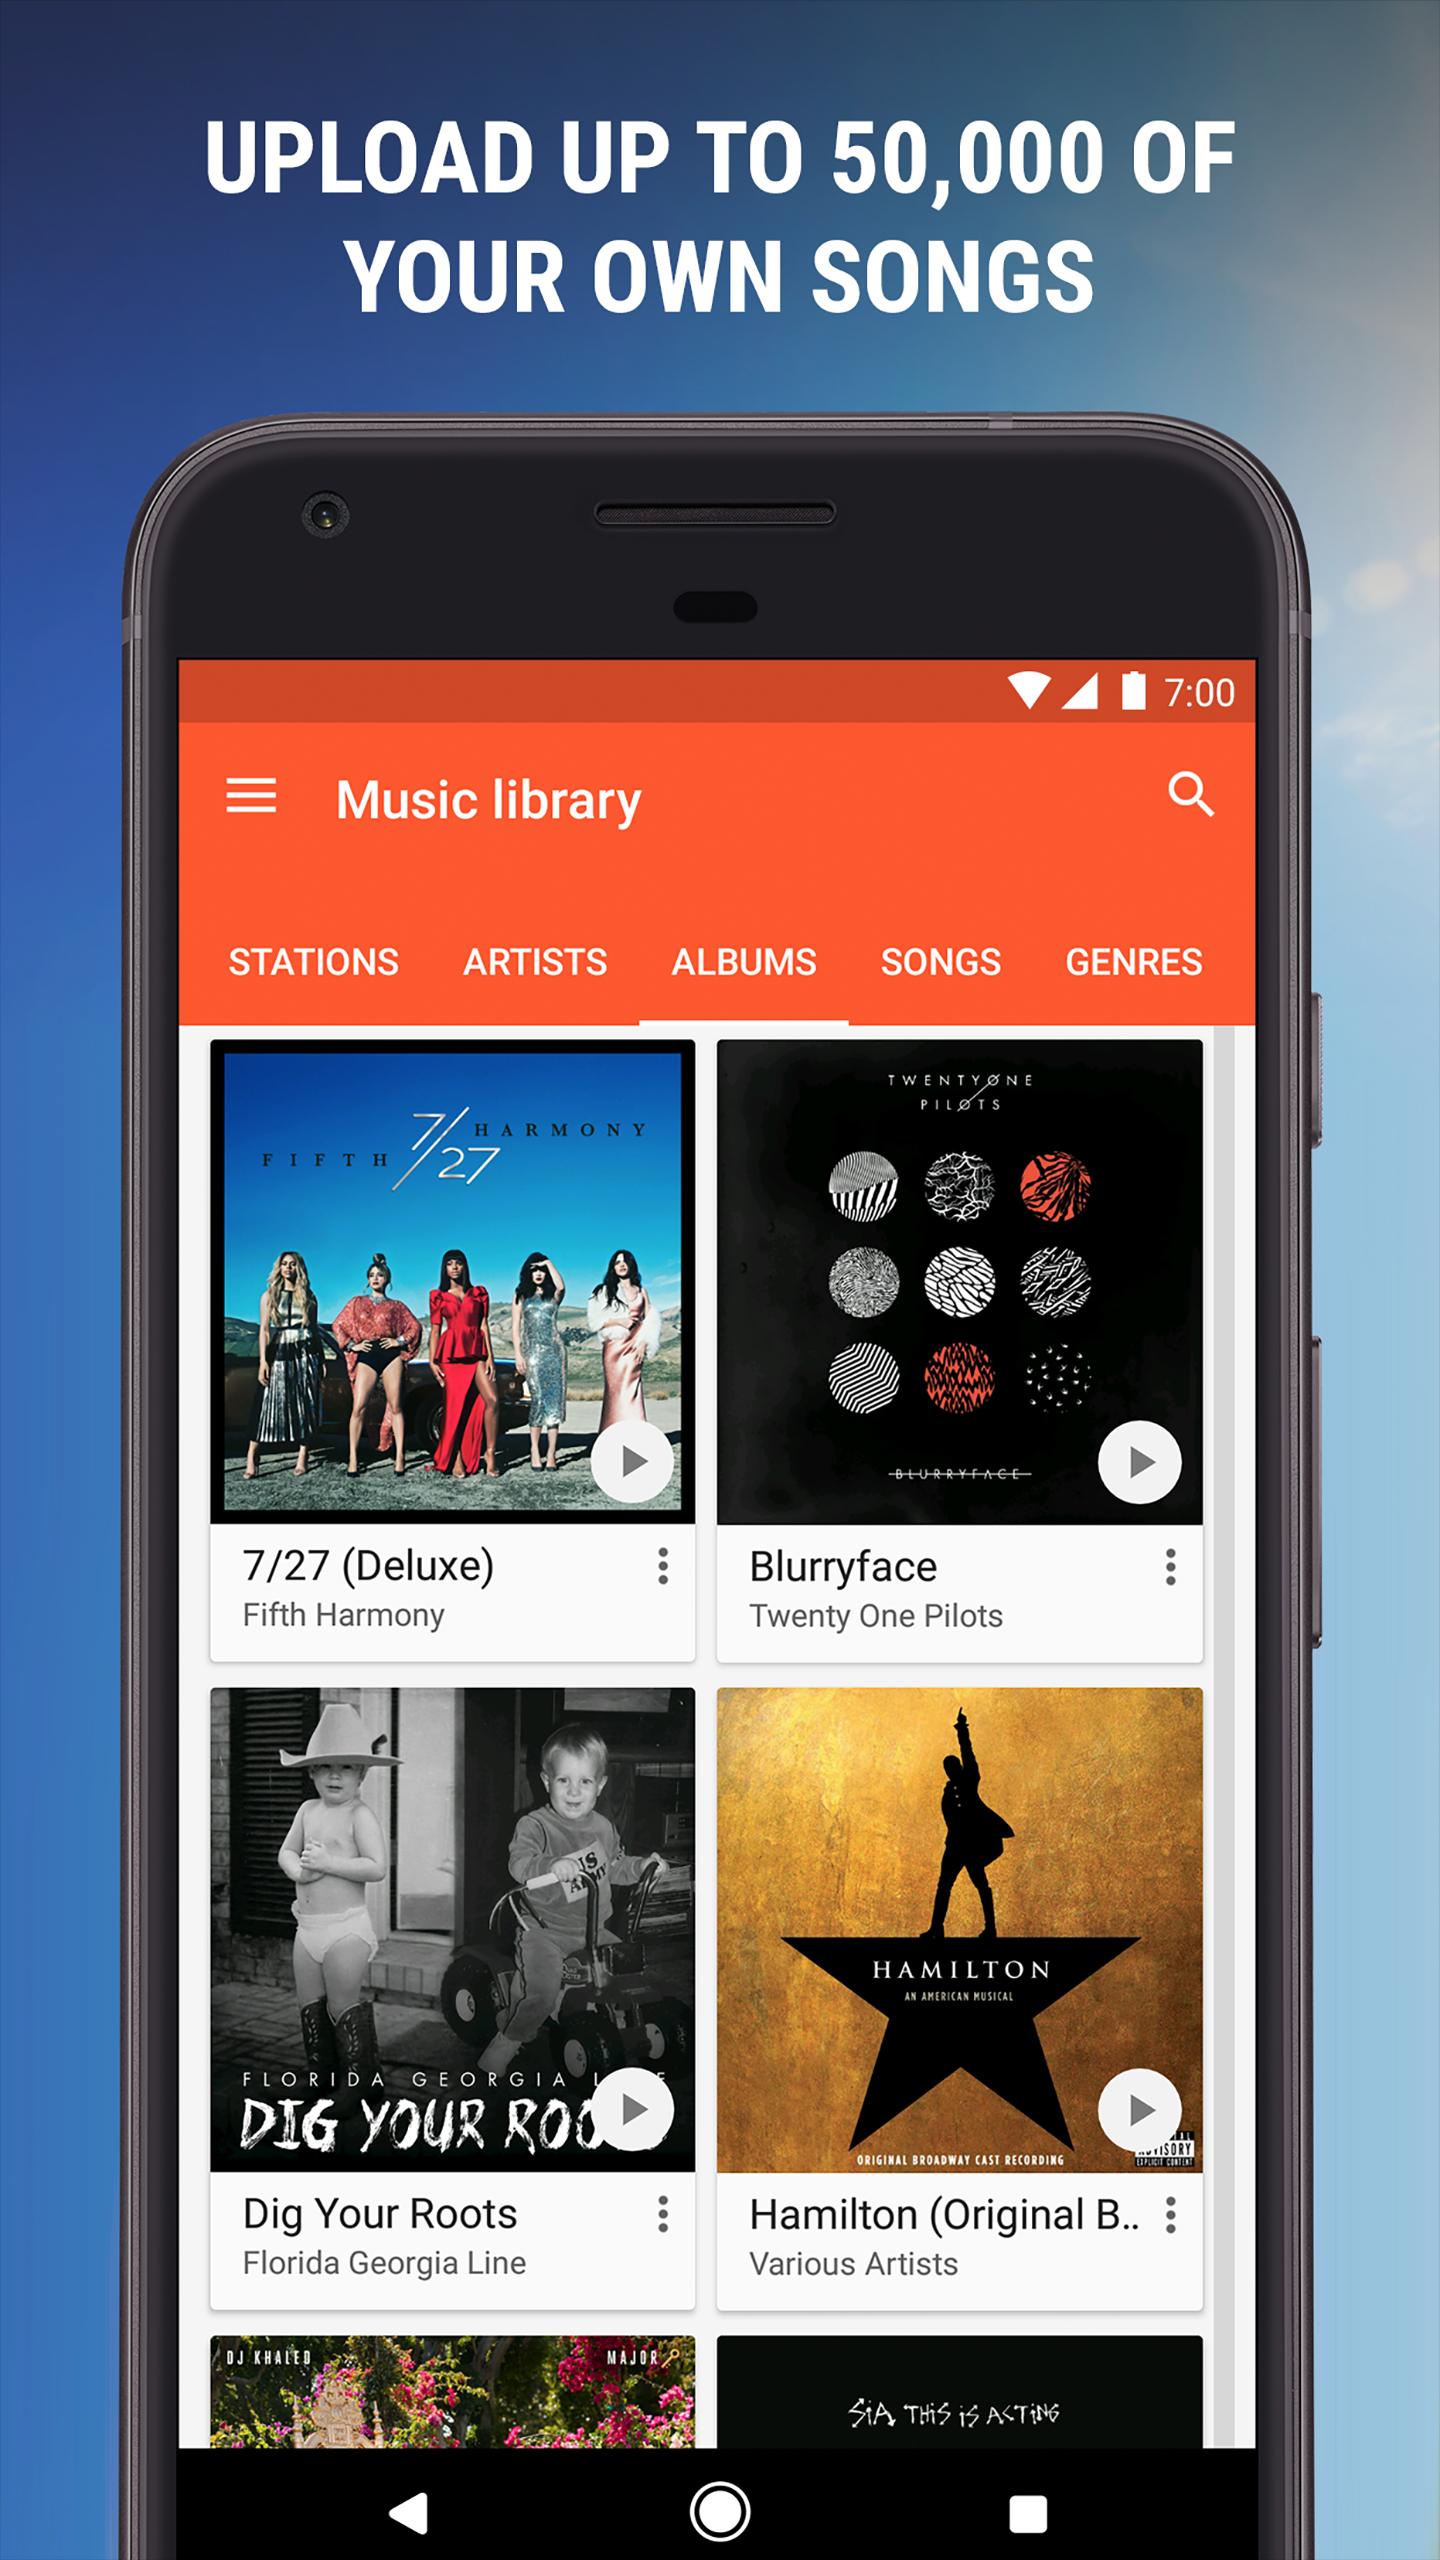 Well play music. Музыкальные приложения. Музыкальное приложение для андроид. Music приложение для андроид. Музыкальные программы для андроид.